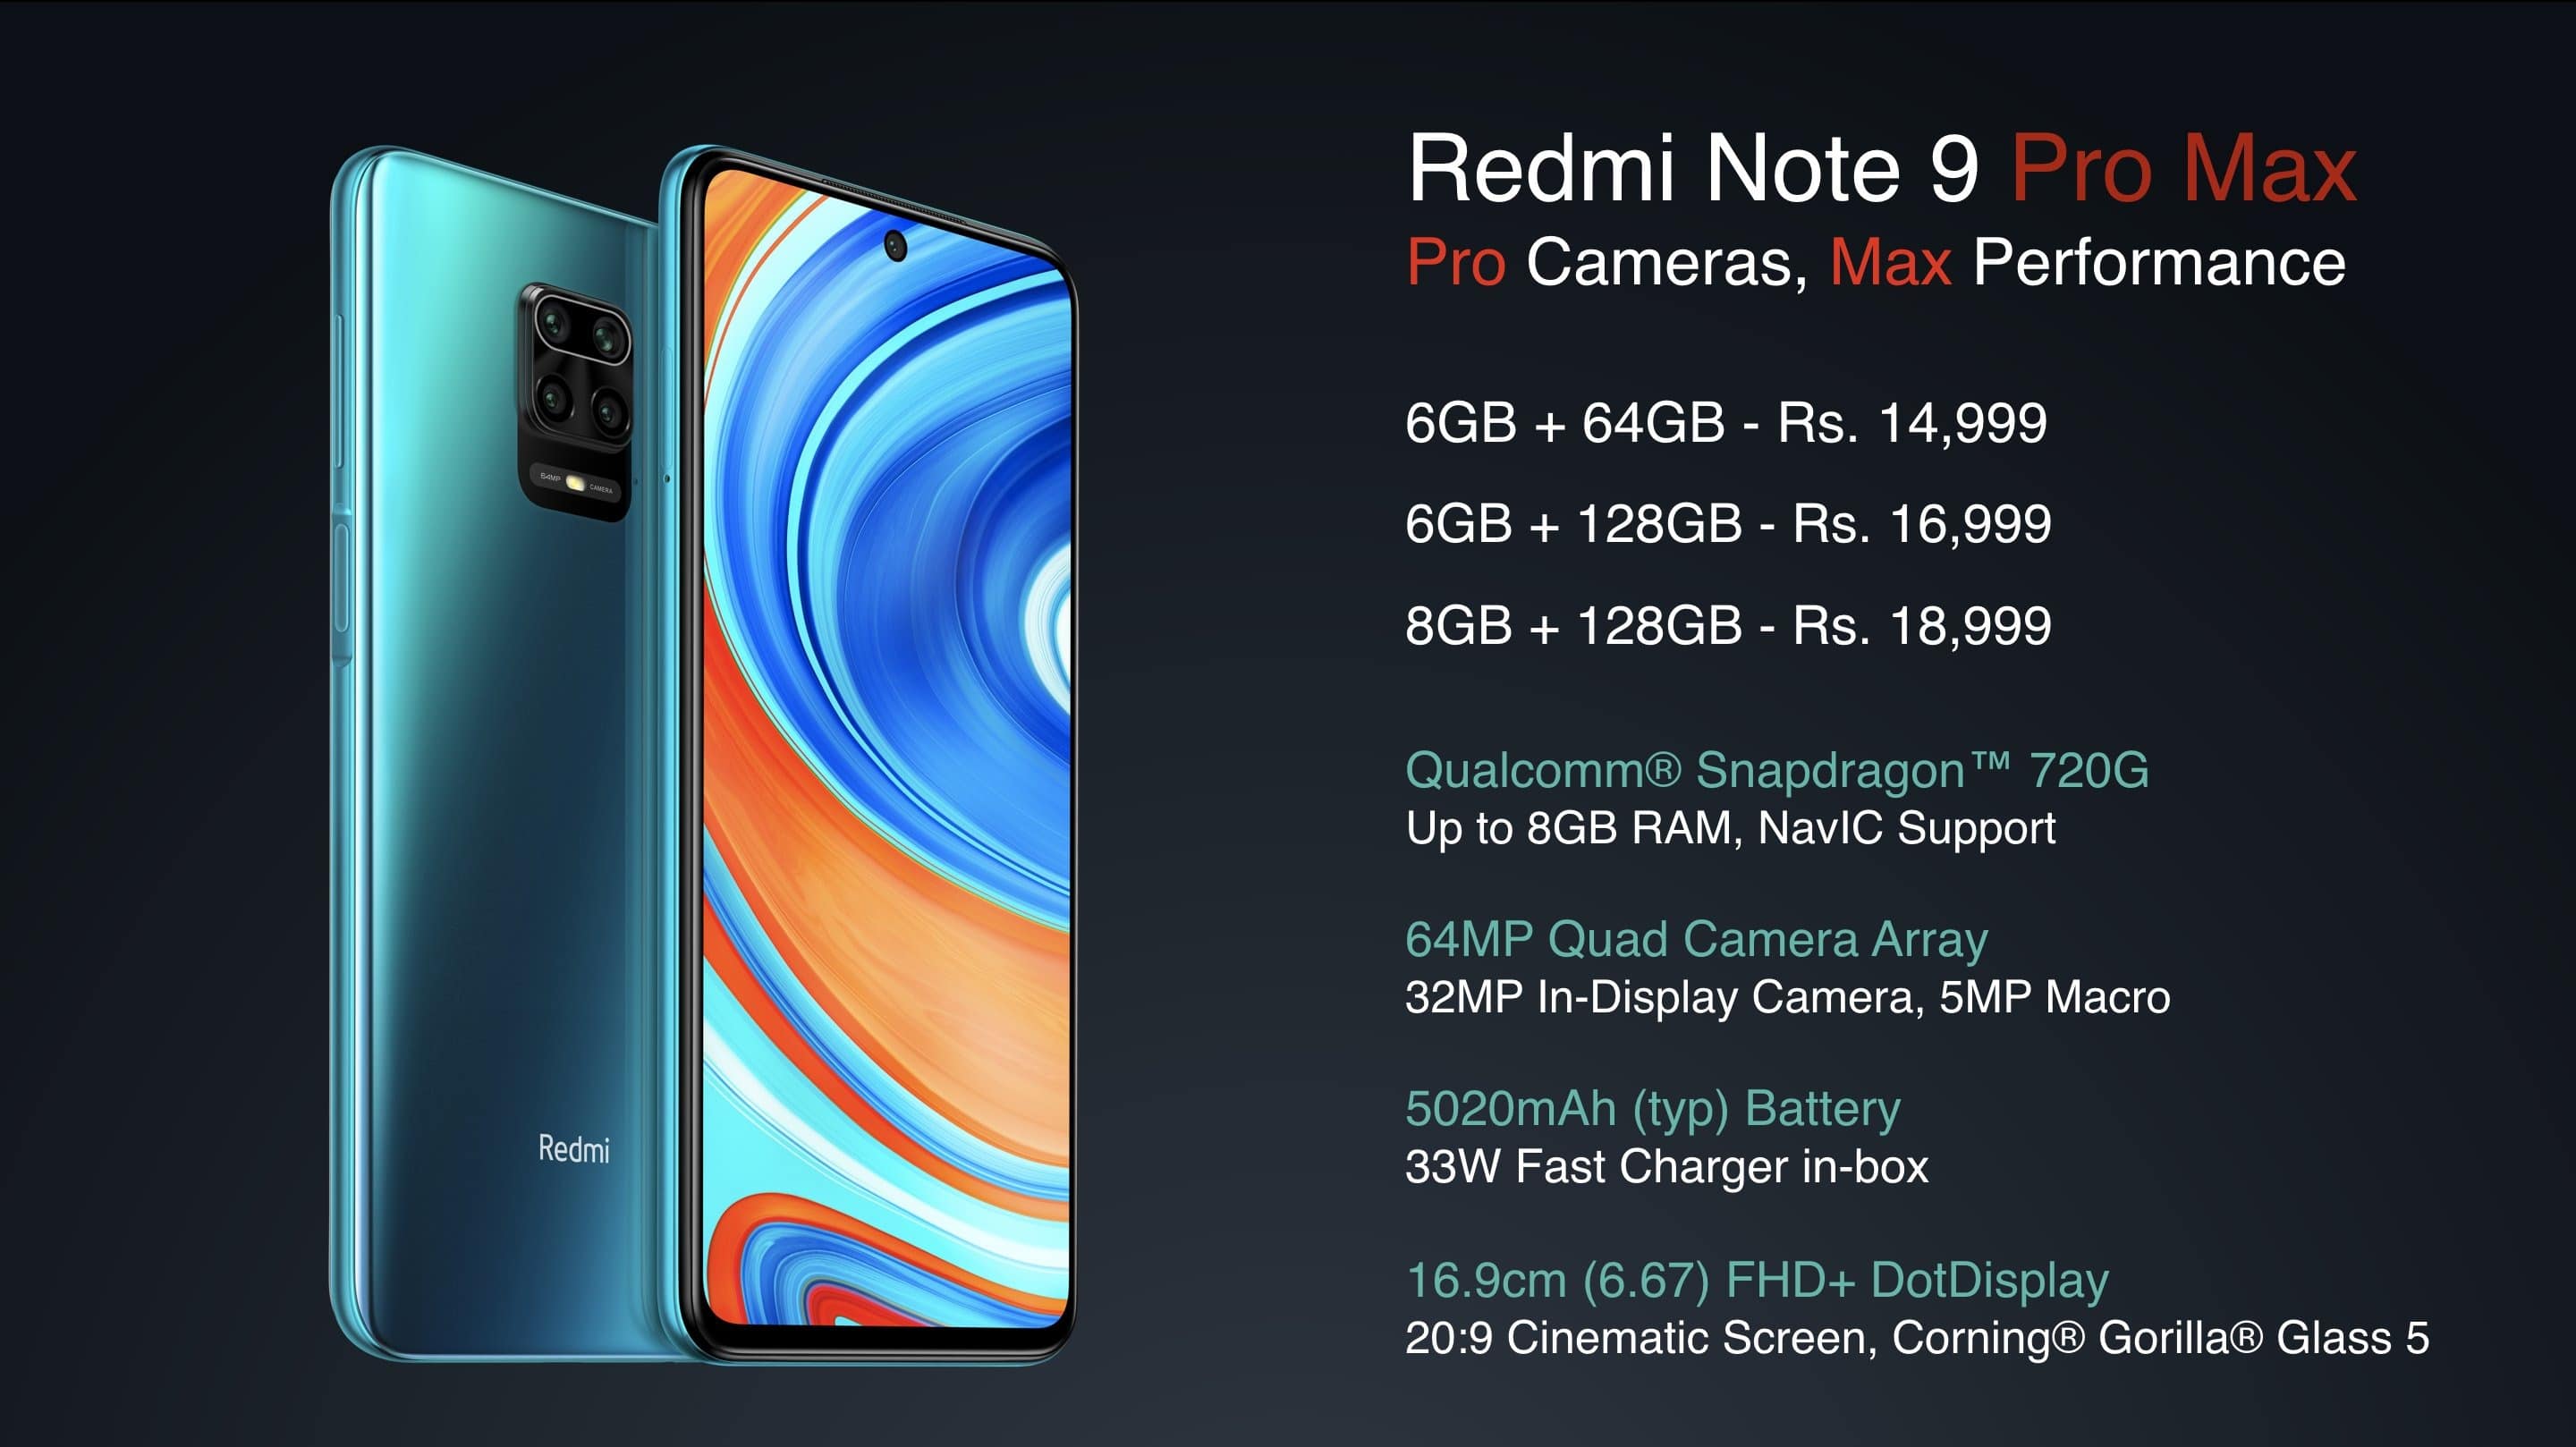 Redmi Note 11 Pro 4pda